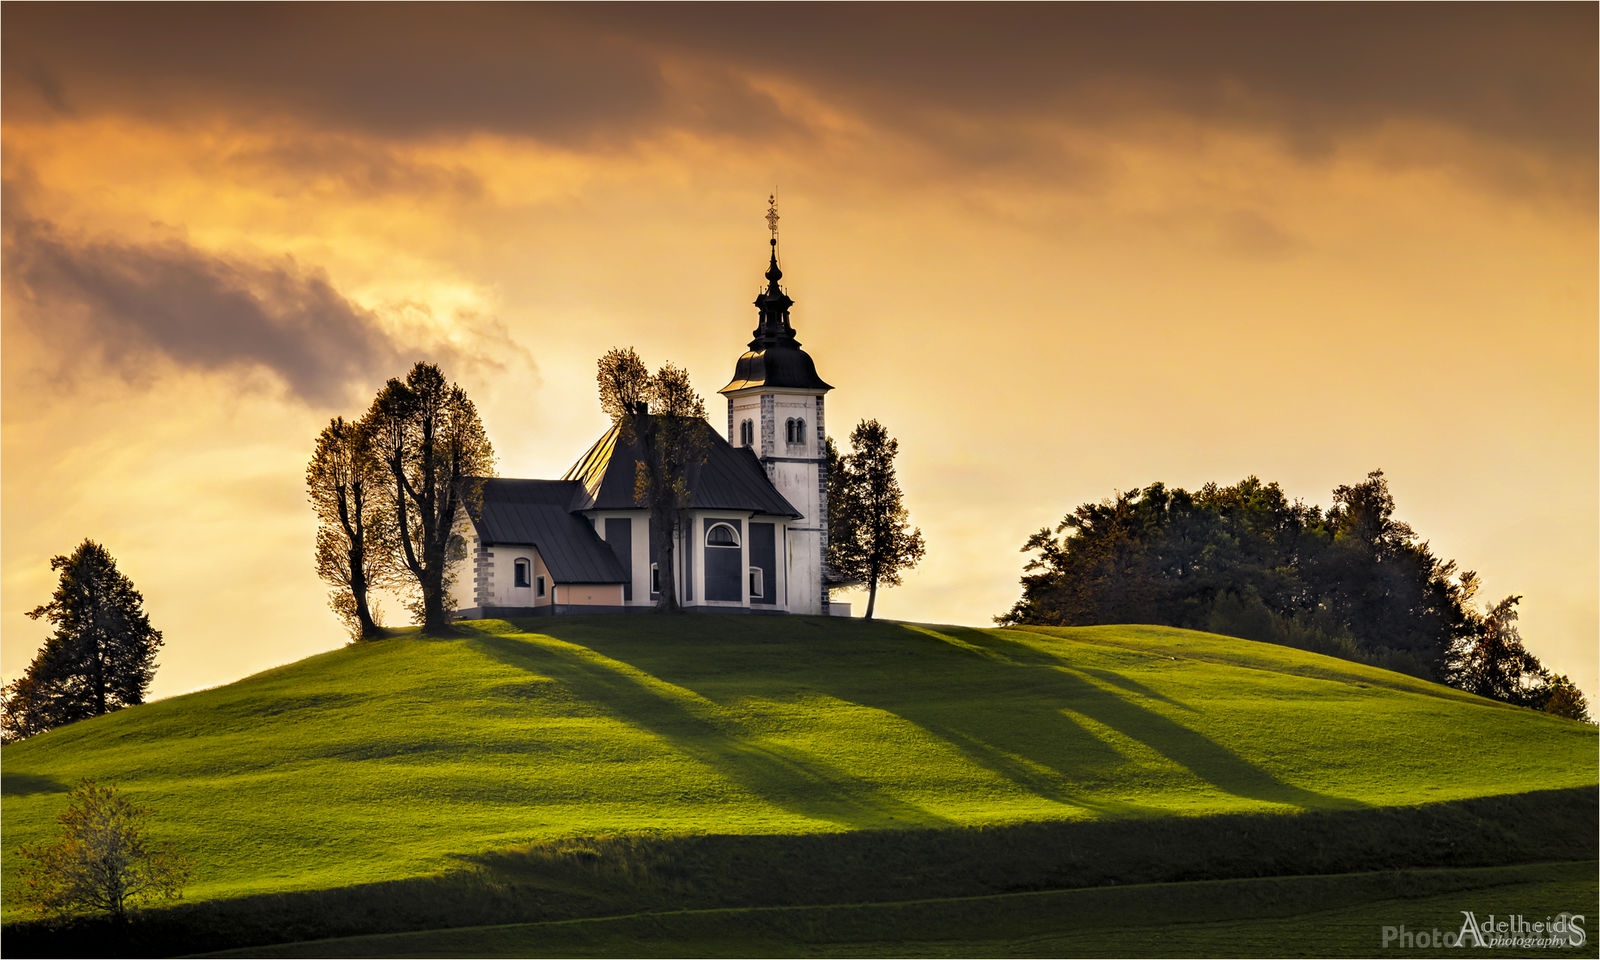 Image of Bukov Vrh Church by Adelheid Smitt